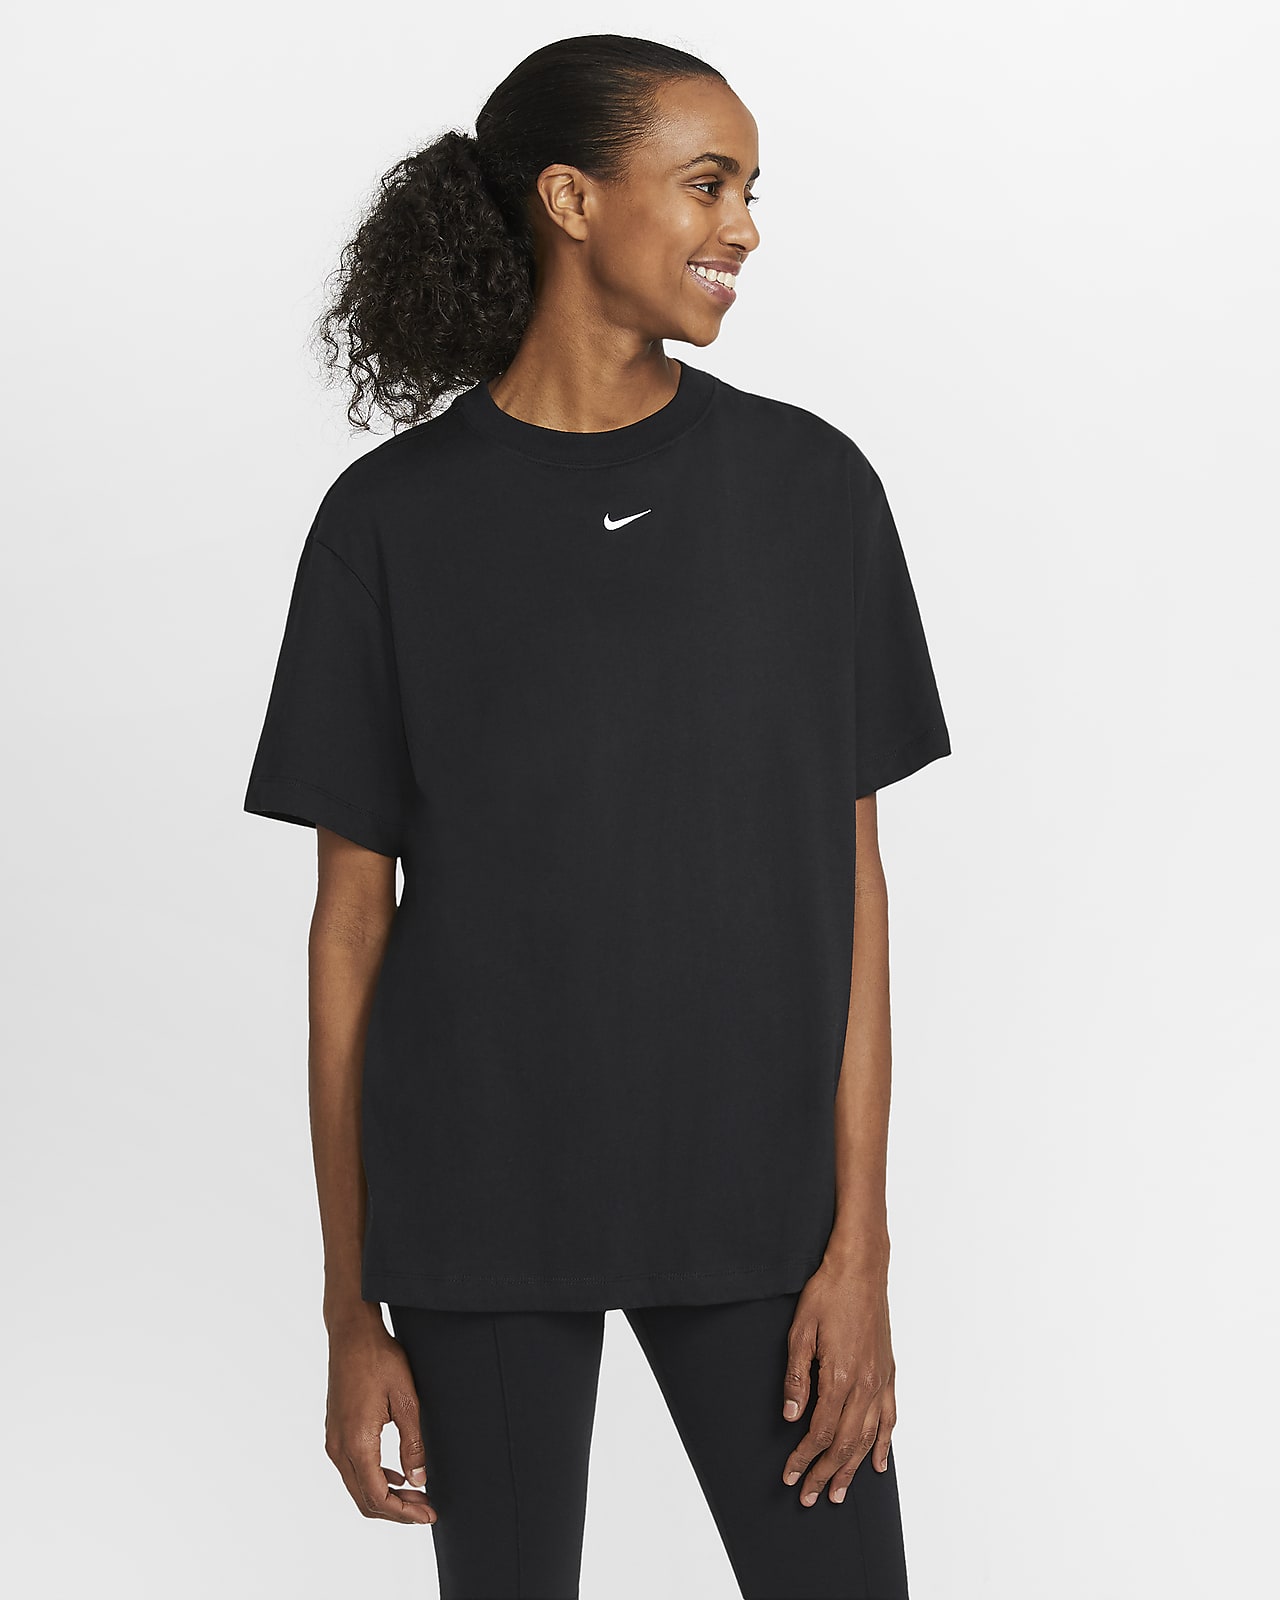 Nike Sportswear Essential 女款男友版T 恤。Nike TW